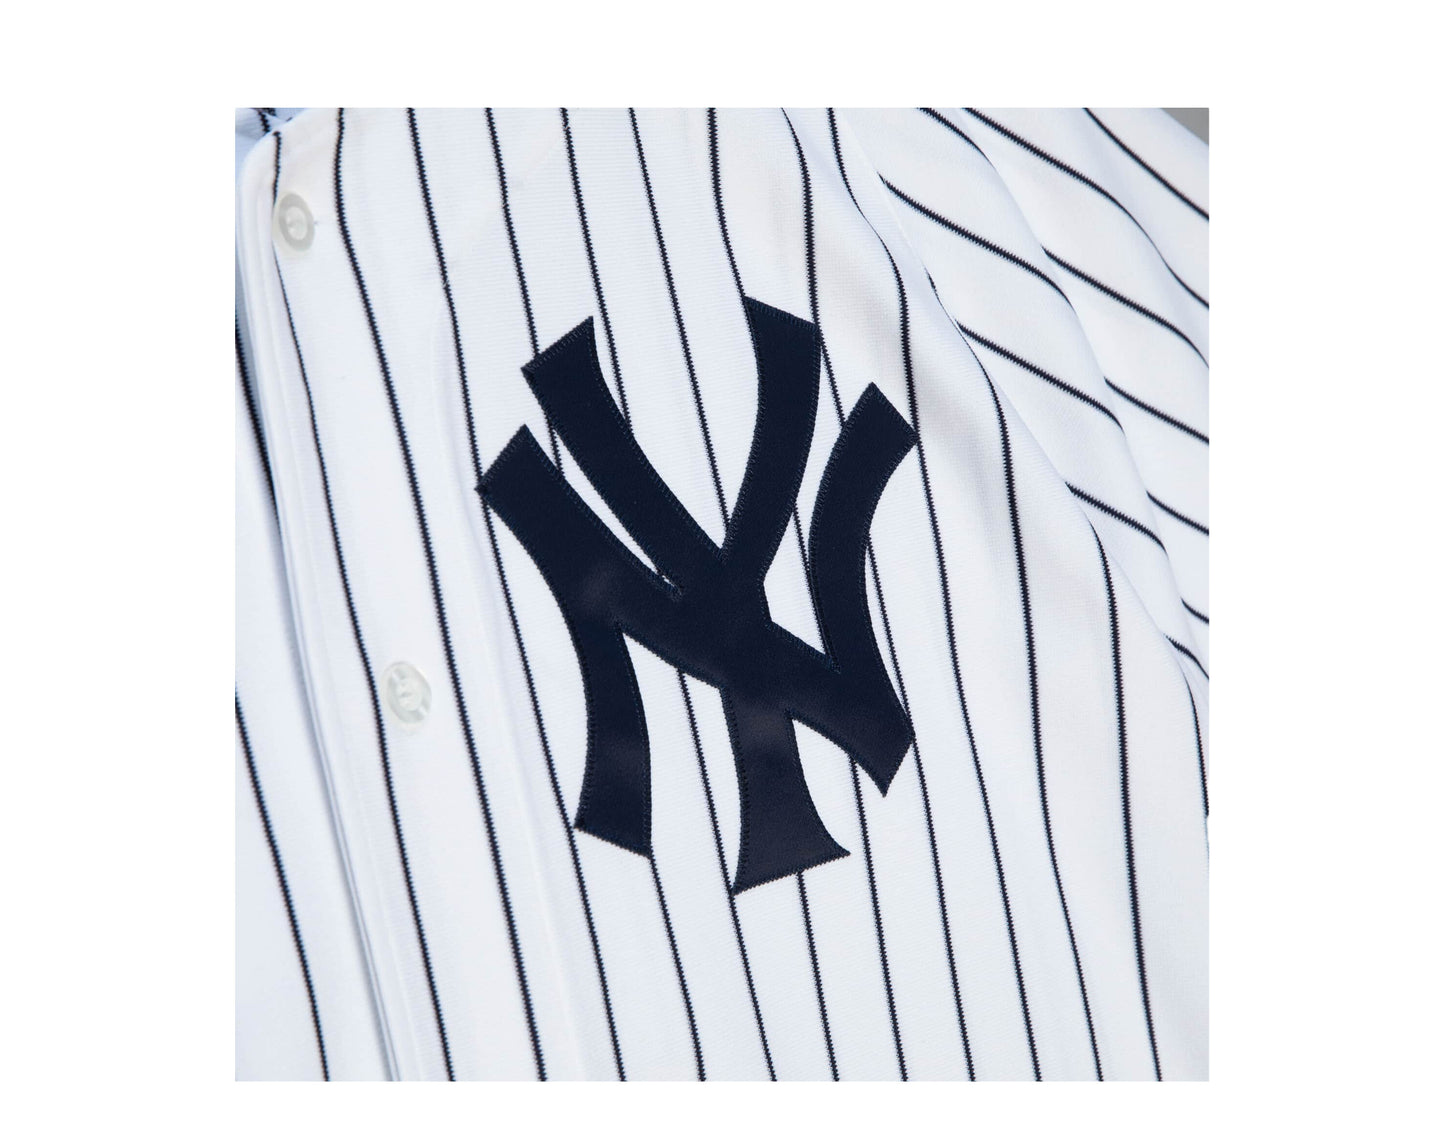 Mitchell & Ness Authentic New York Yankees 1997 Derek Jeter Home Jersey